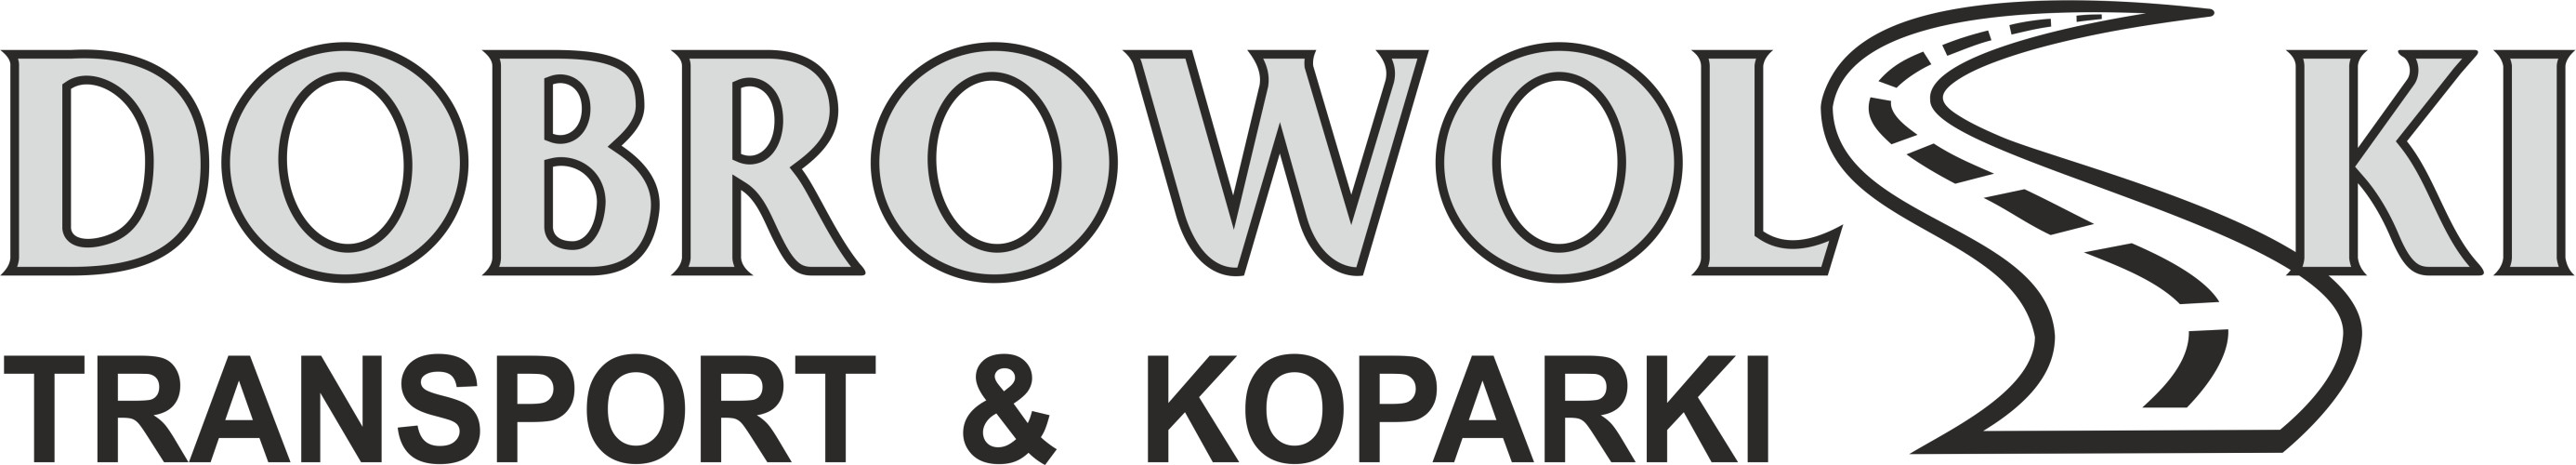 Dobrowolski transport logo